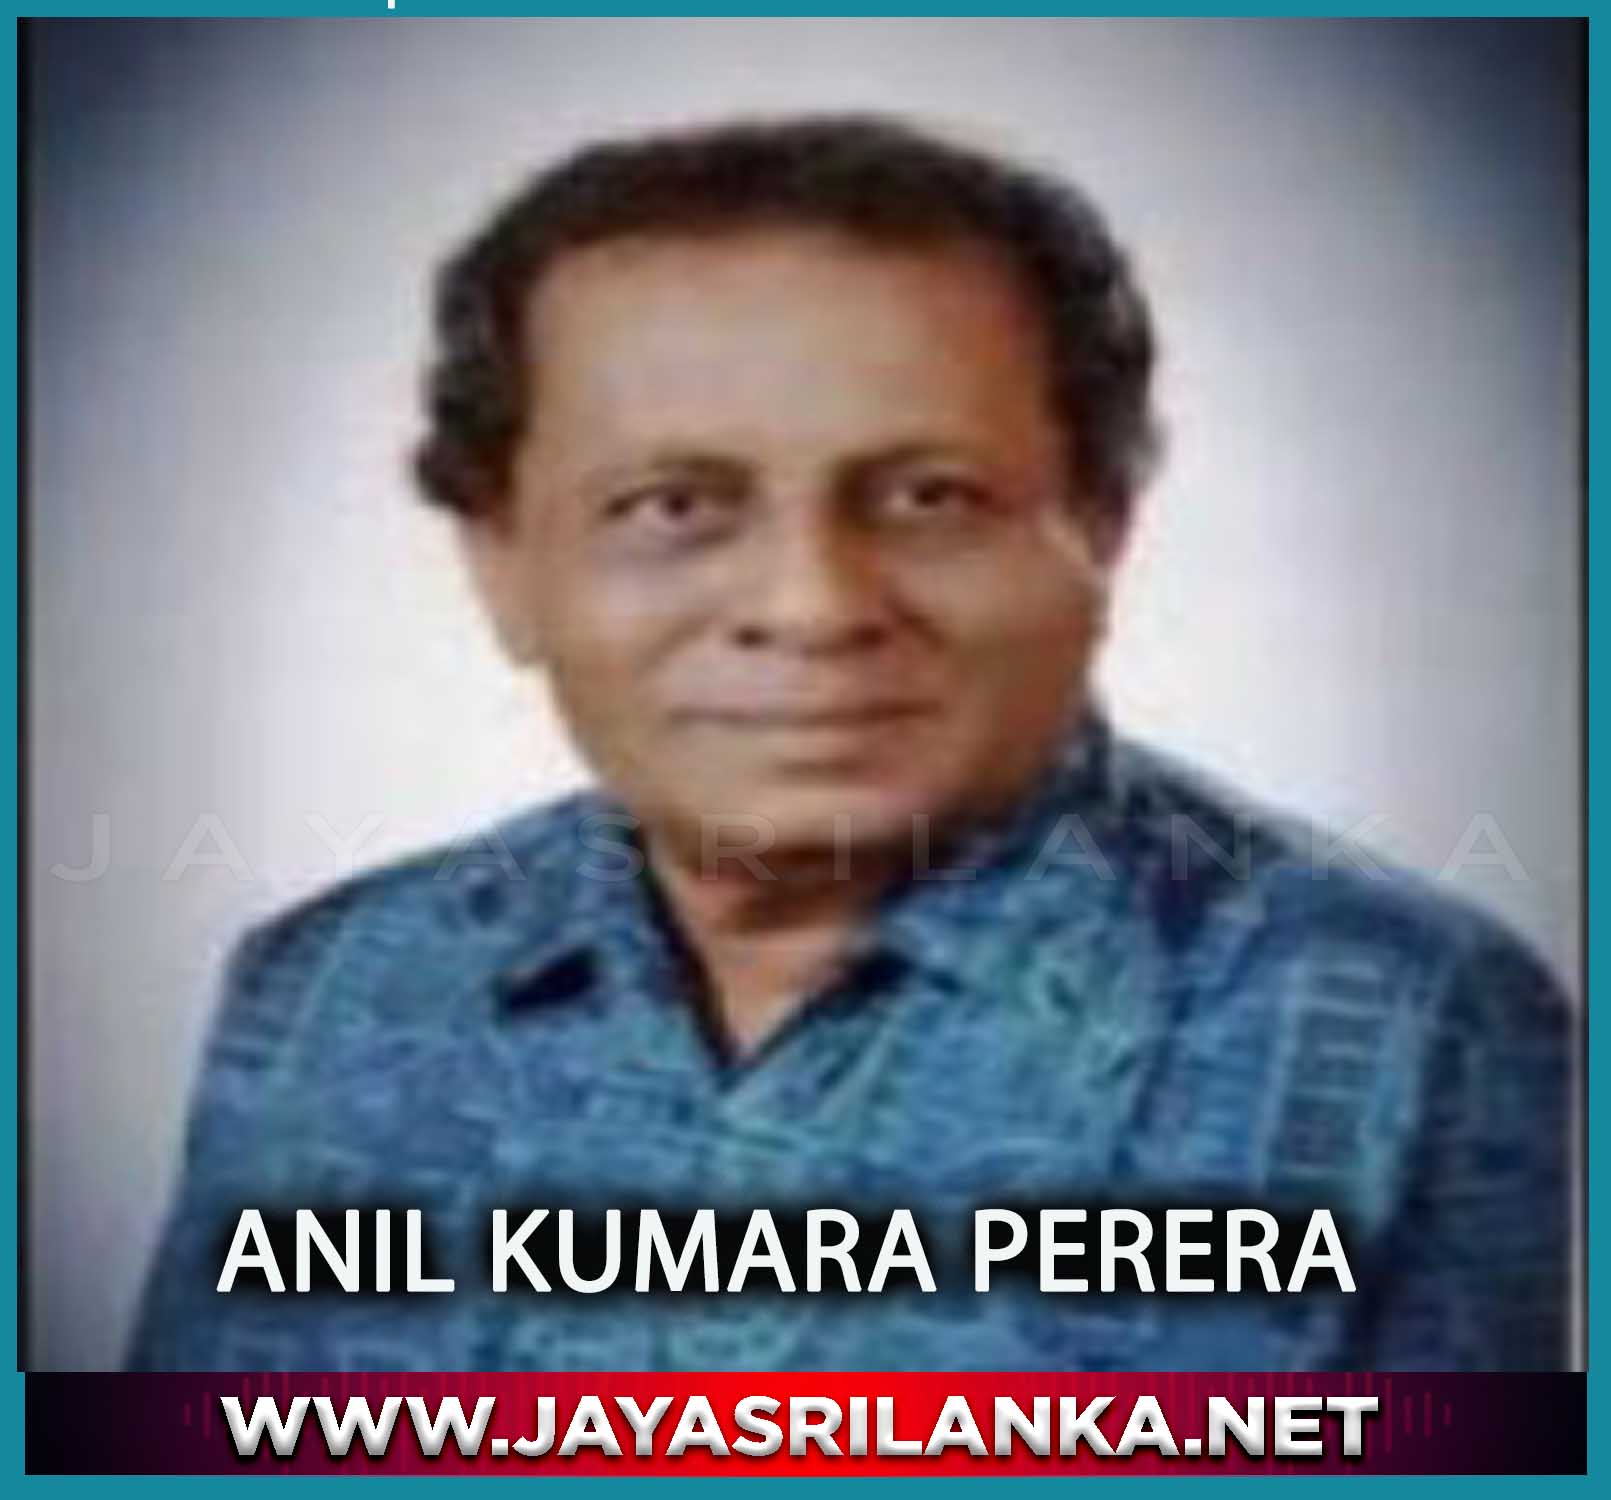 Lanka Jaya Boomi (Dheera Weera) - Anil Kumara Perera mp3 Image